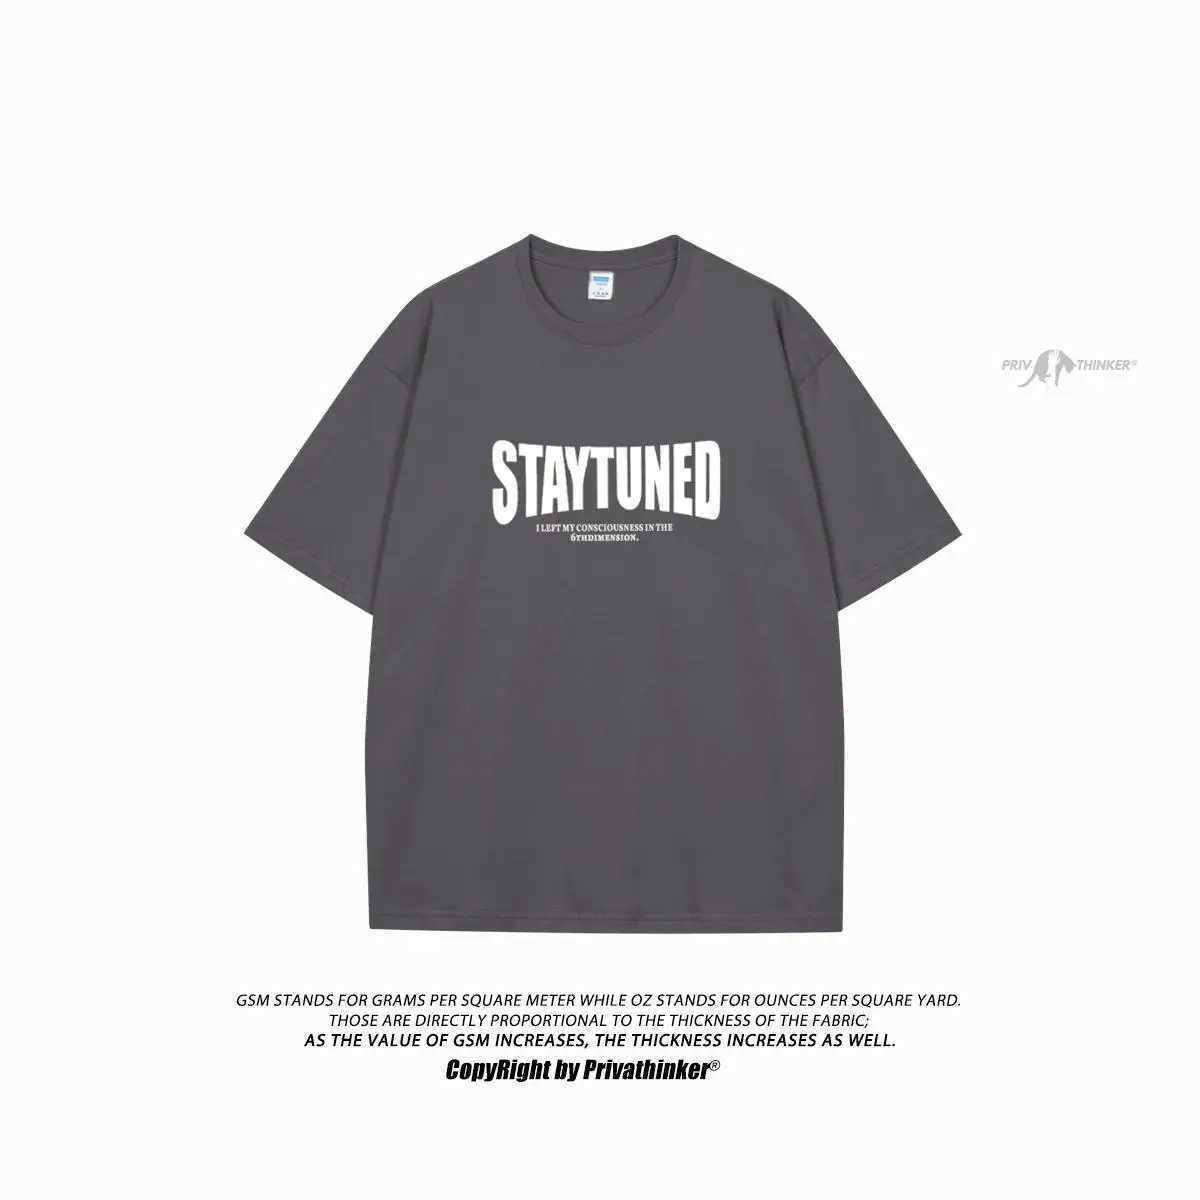 Мужские футболки Staytuned-Camiseta хип-хоп Masculina Strtwear Grfico com letras largas camisetas de manga curta tops 100% algodo moda marca vero h240425